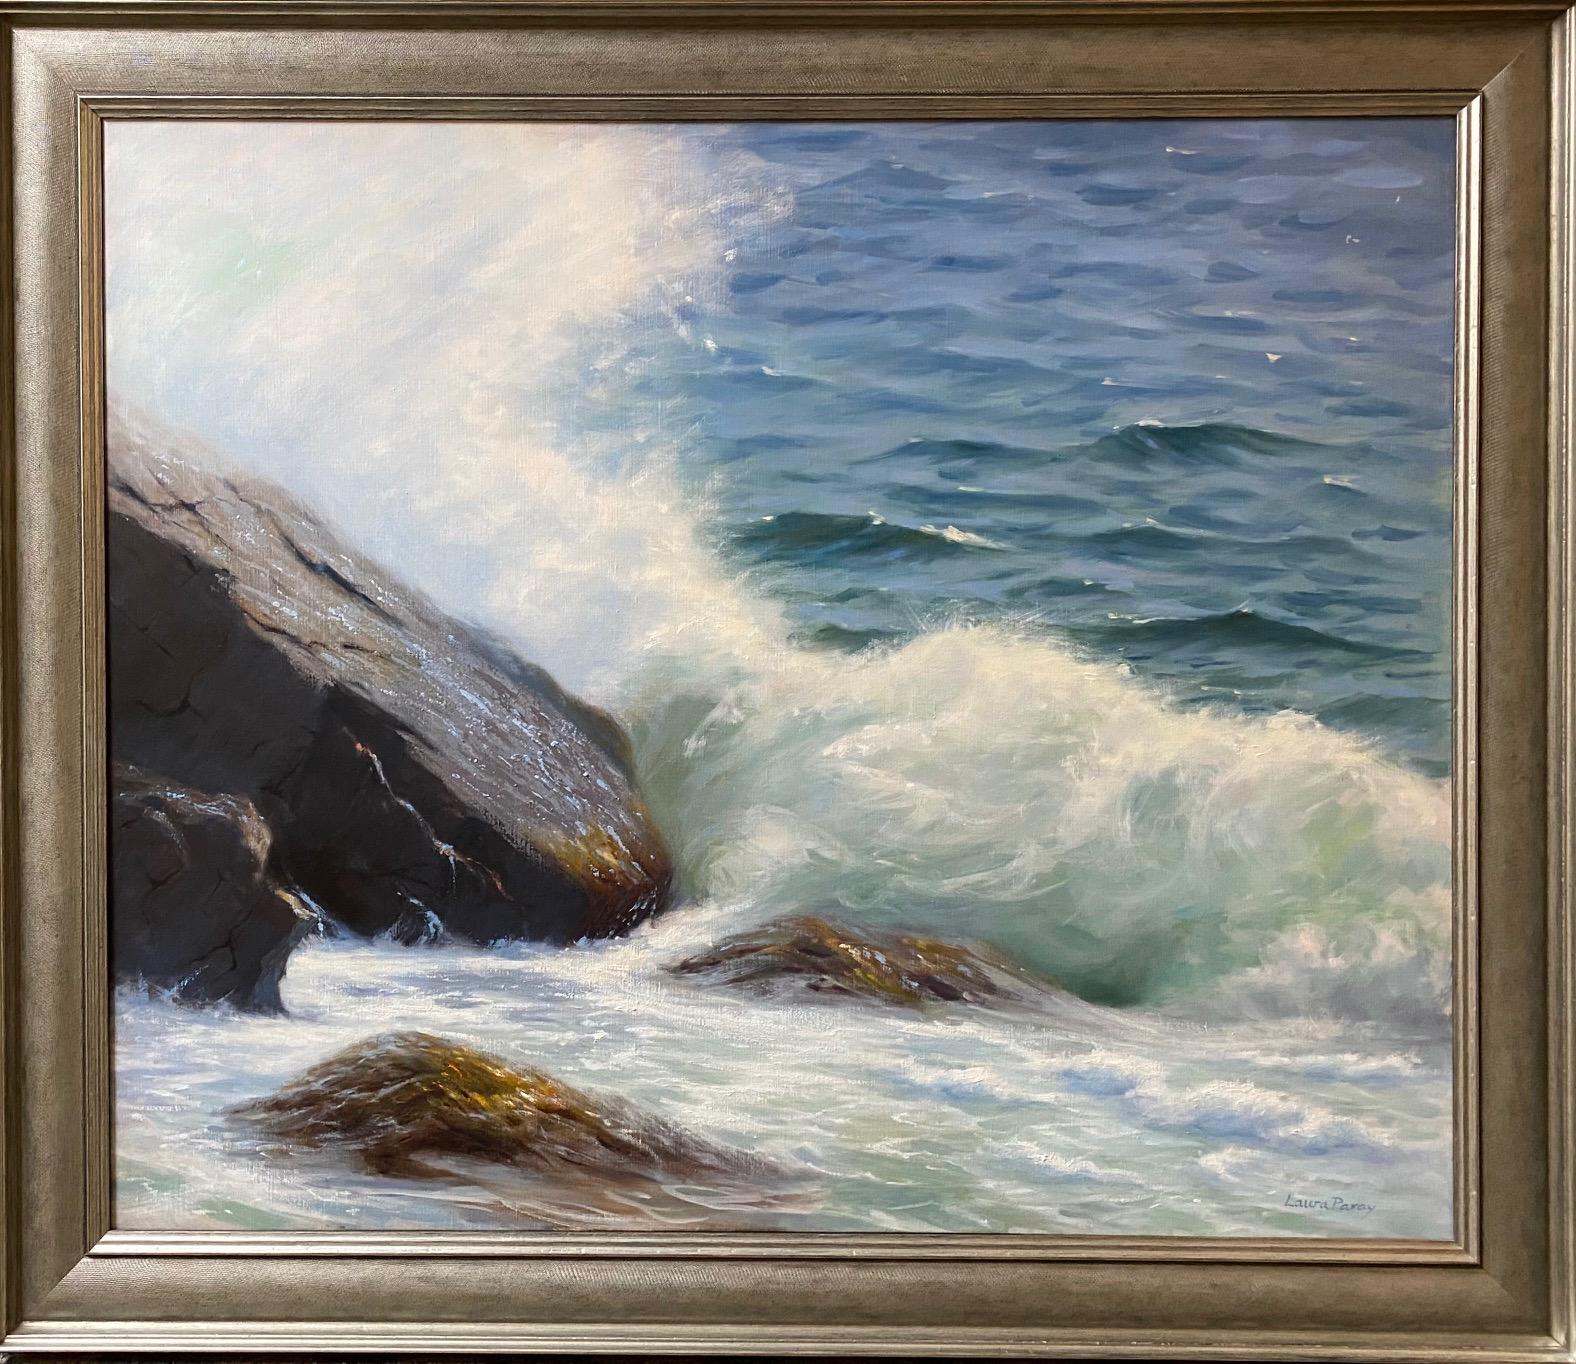 Laura Paray Landscape Painting - Roaring Waters, original 30x36 impressionist marine landscape